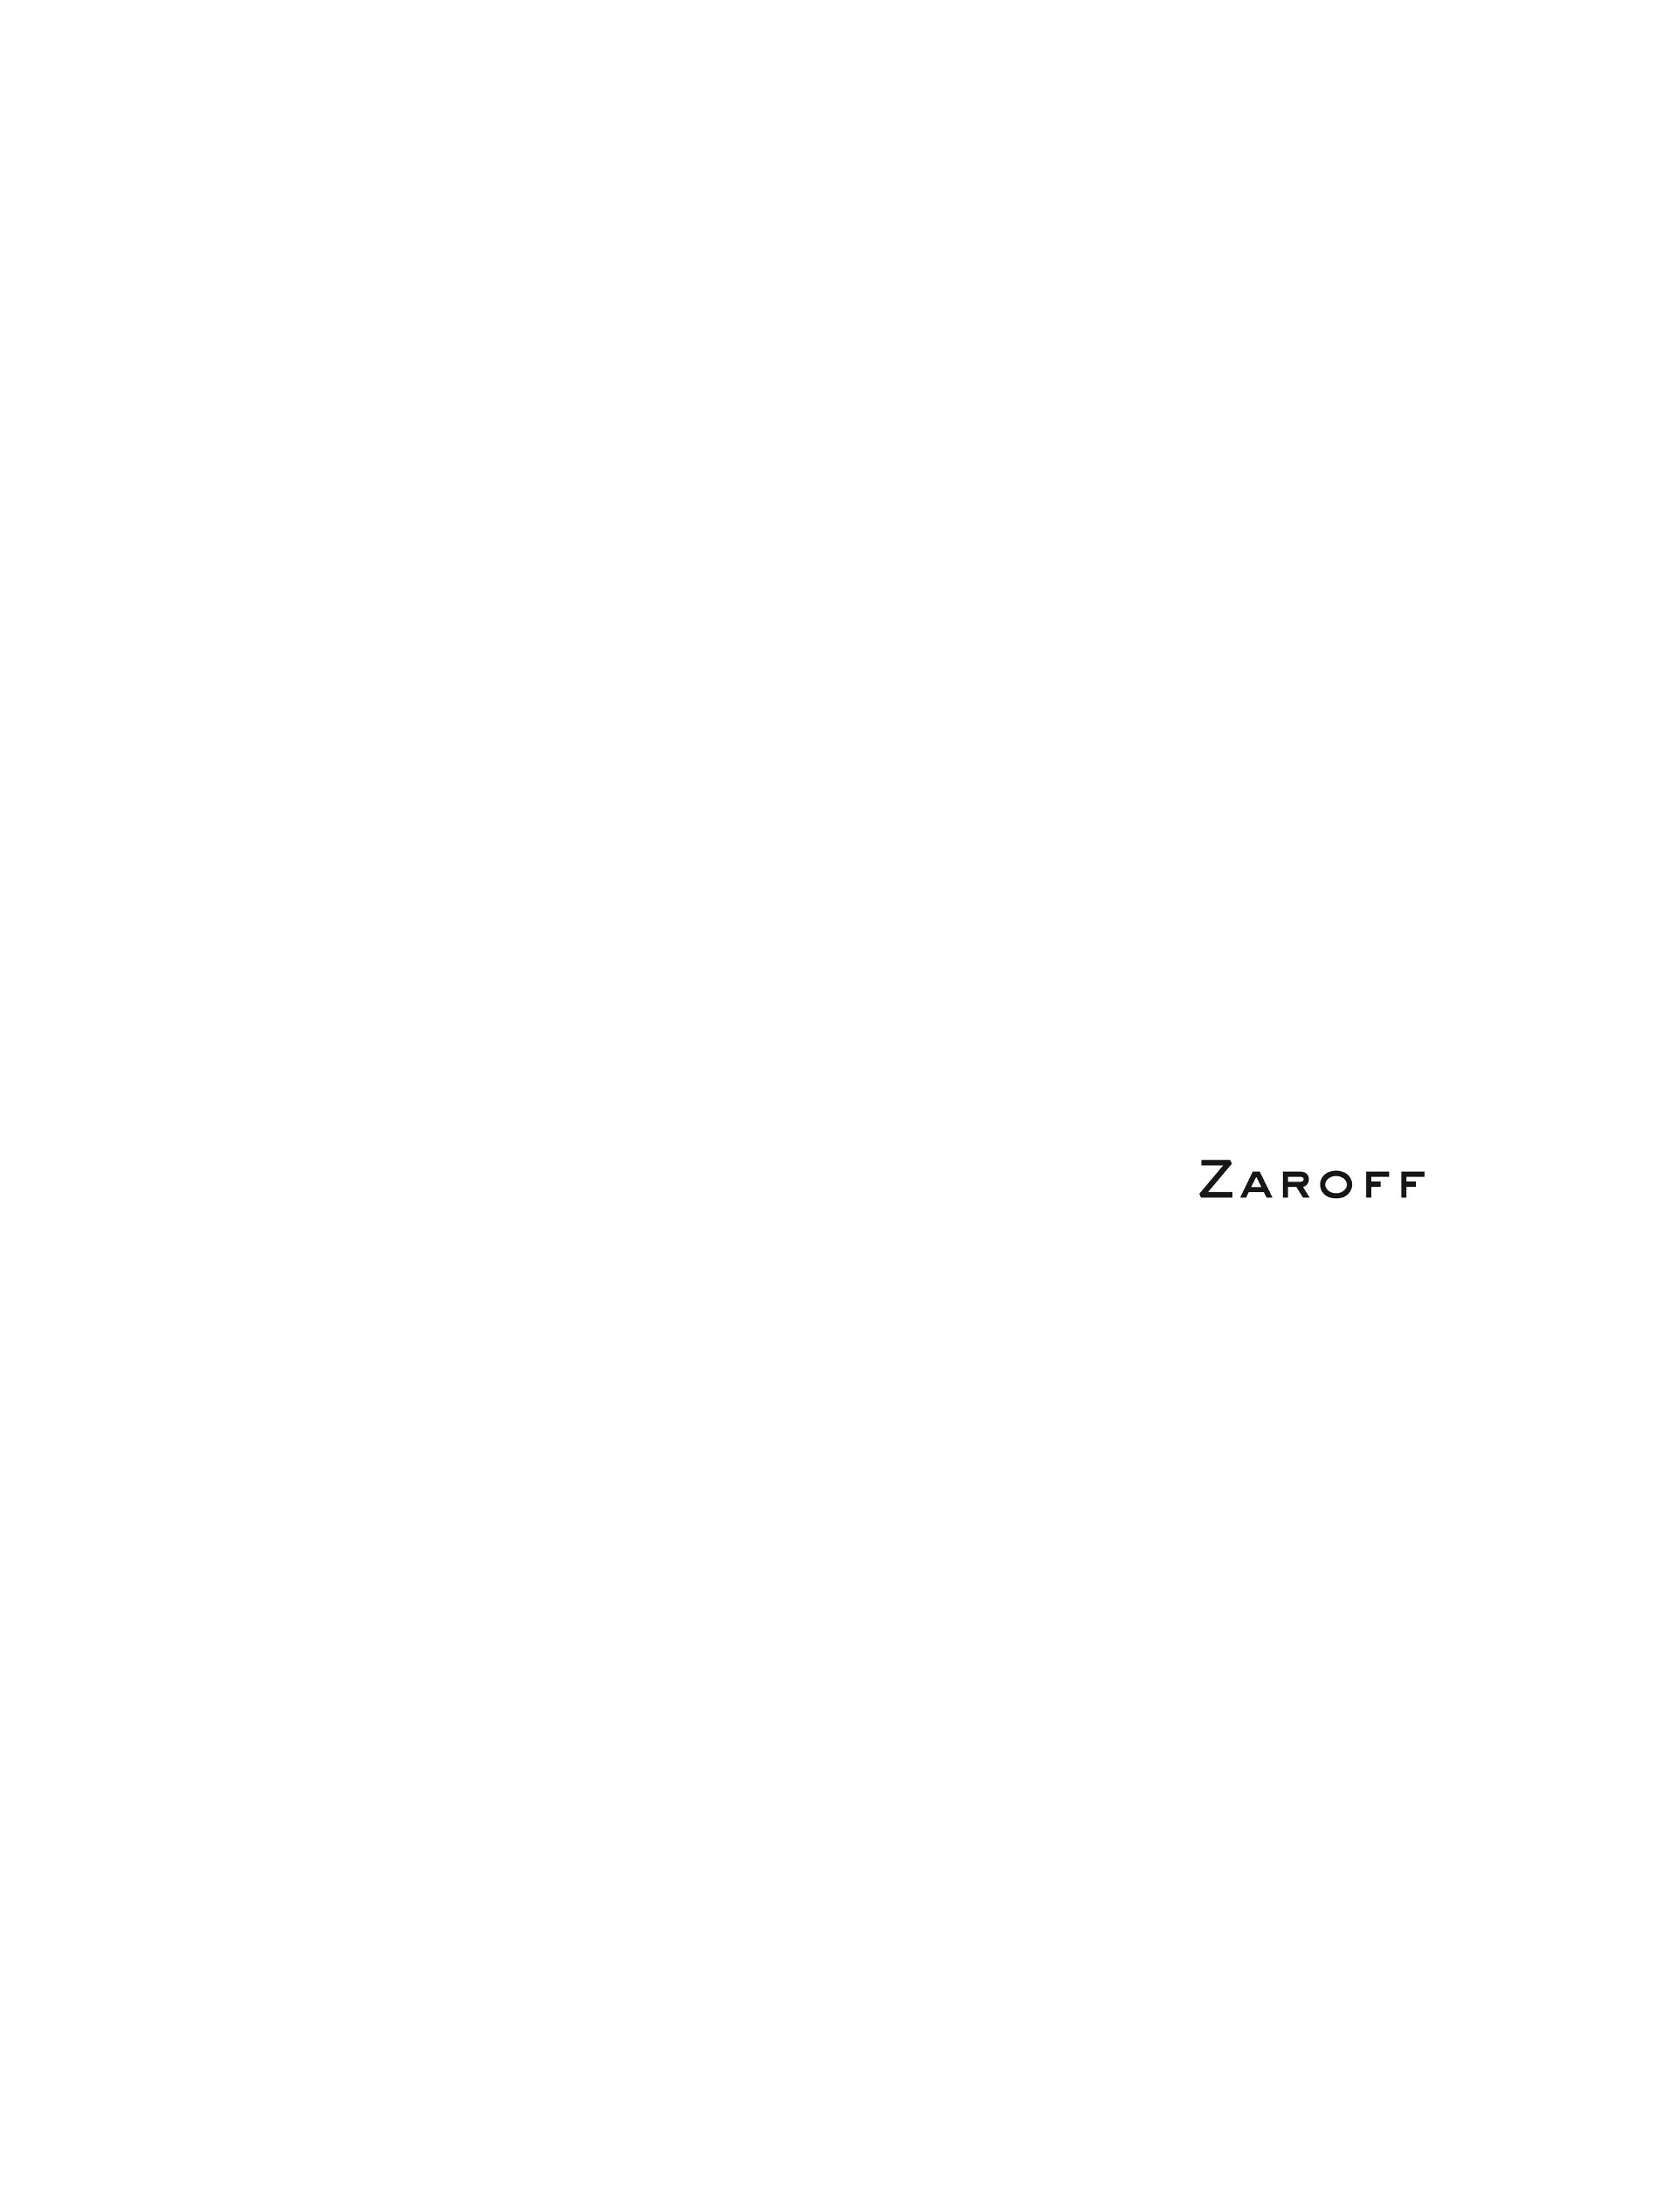 Zaroff (2019): Chapter 1 - Page 3